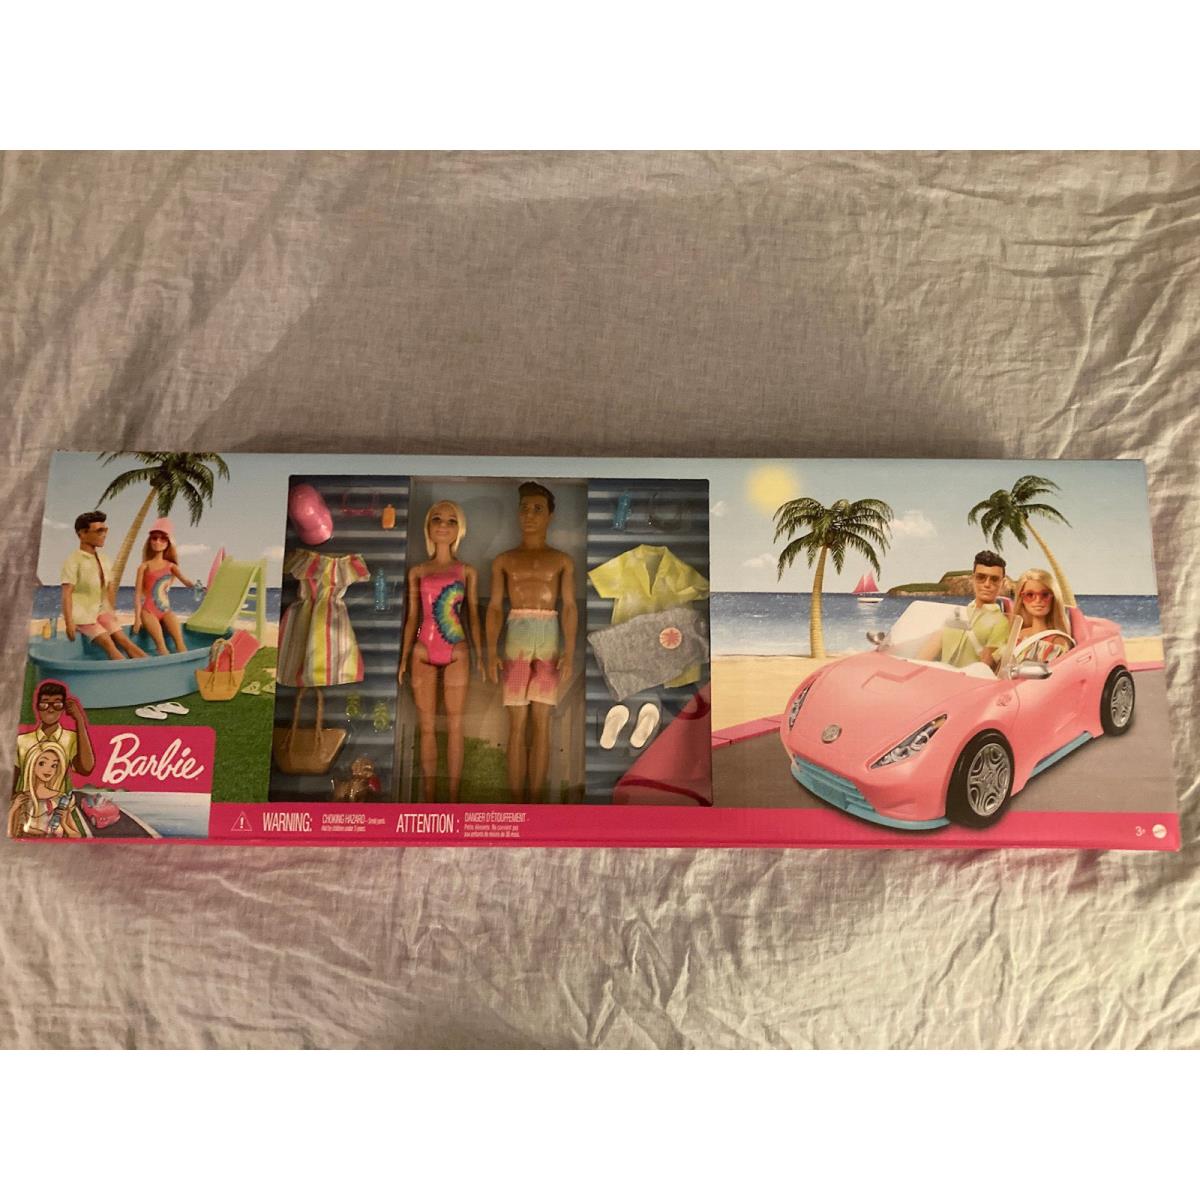 Barbie Blitz Dolls Convertible Car and Pool Playset